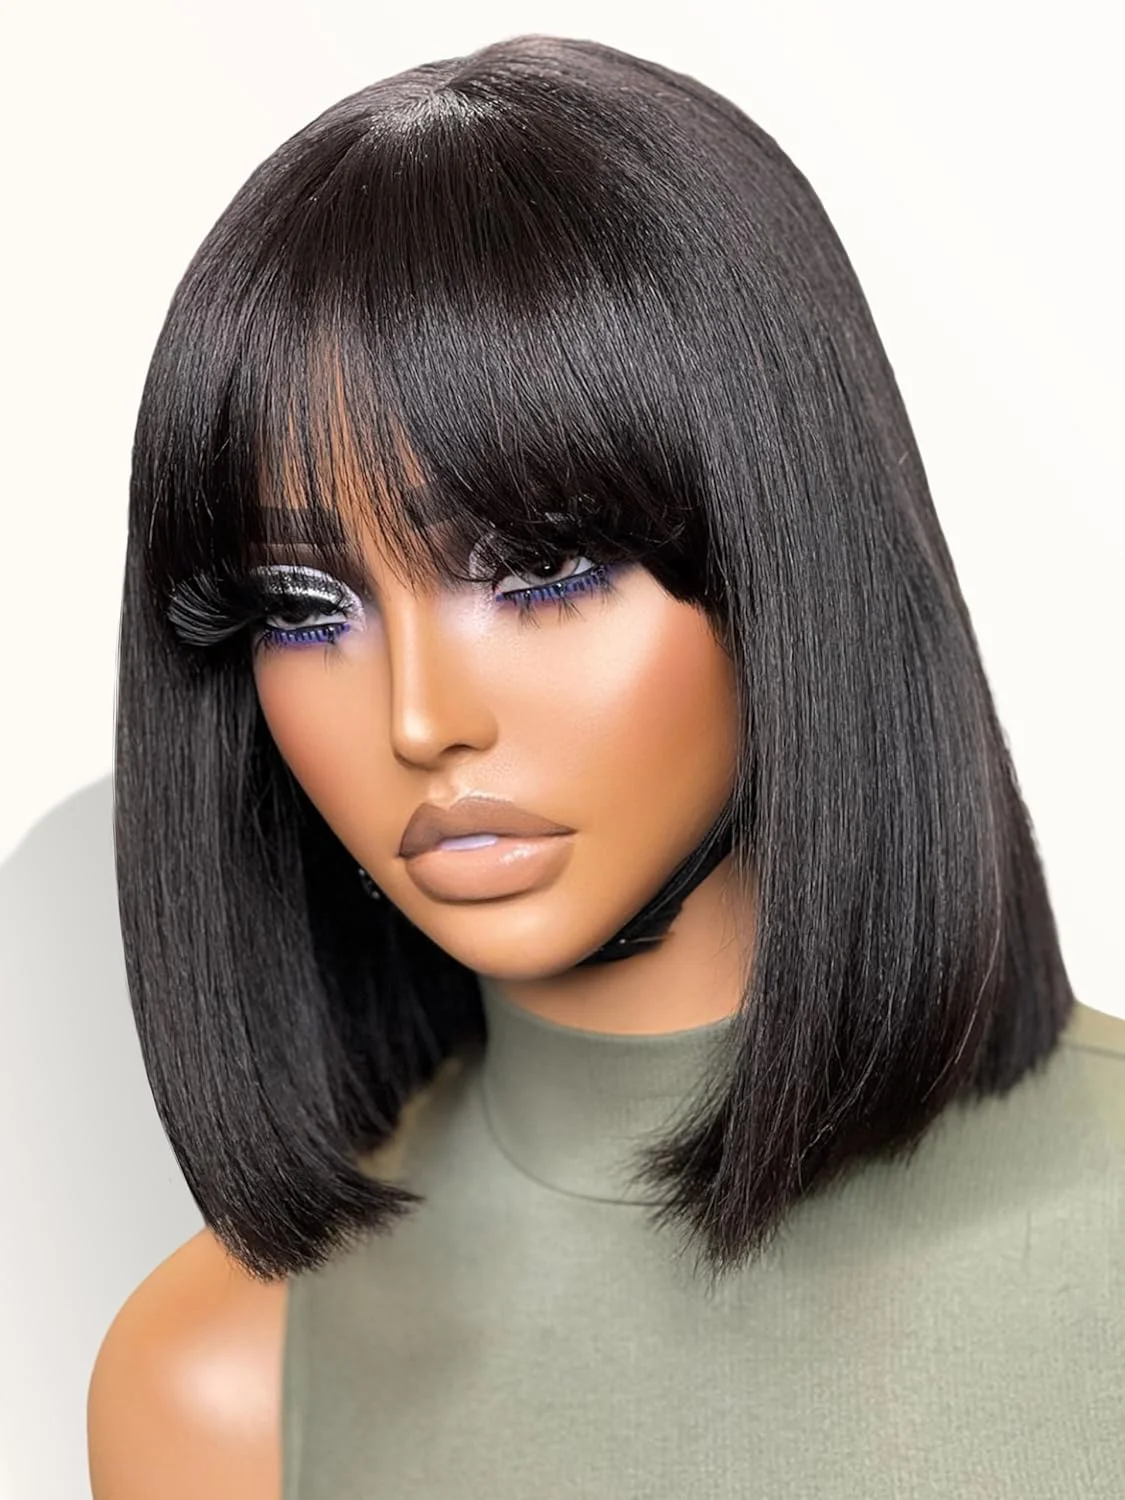 

Short Bob Human Hair Wig With Bangs For Women Brazilian Glueless Pixie Cut Straight Wigs Cheap 100% Human Hair Wig On Sale